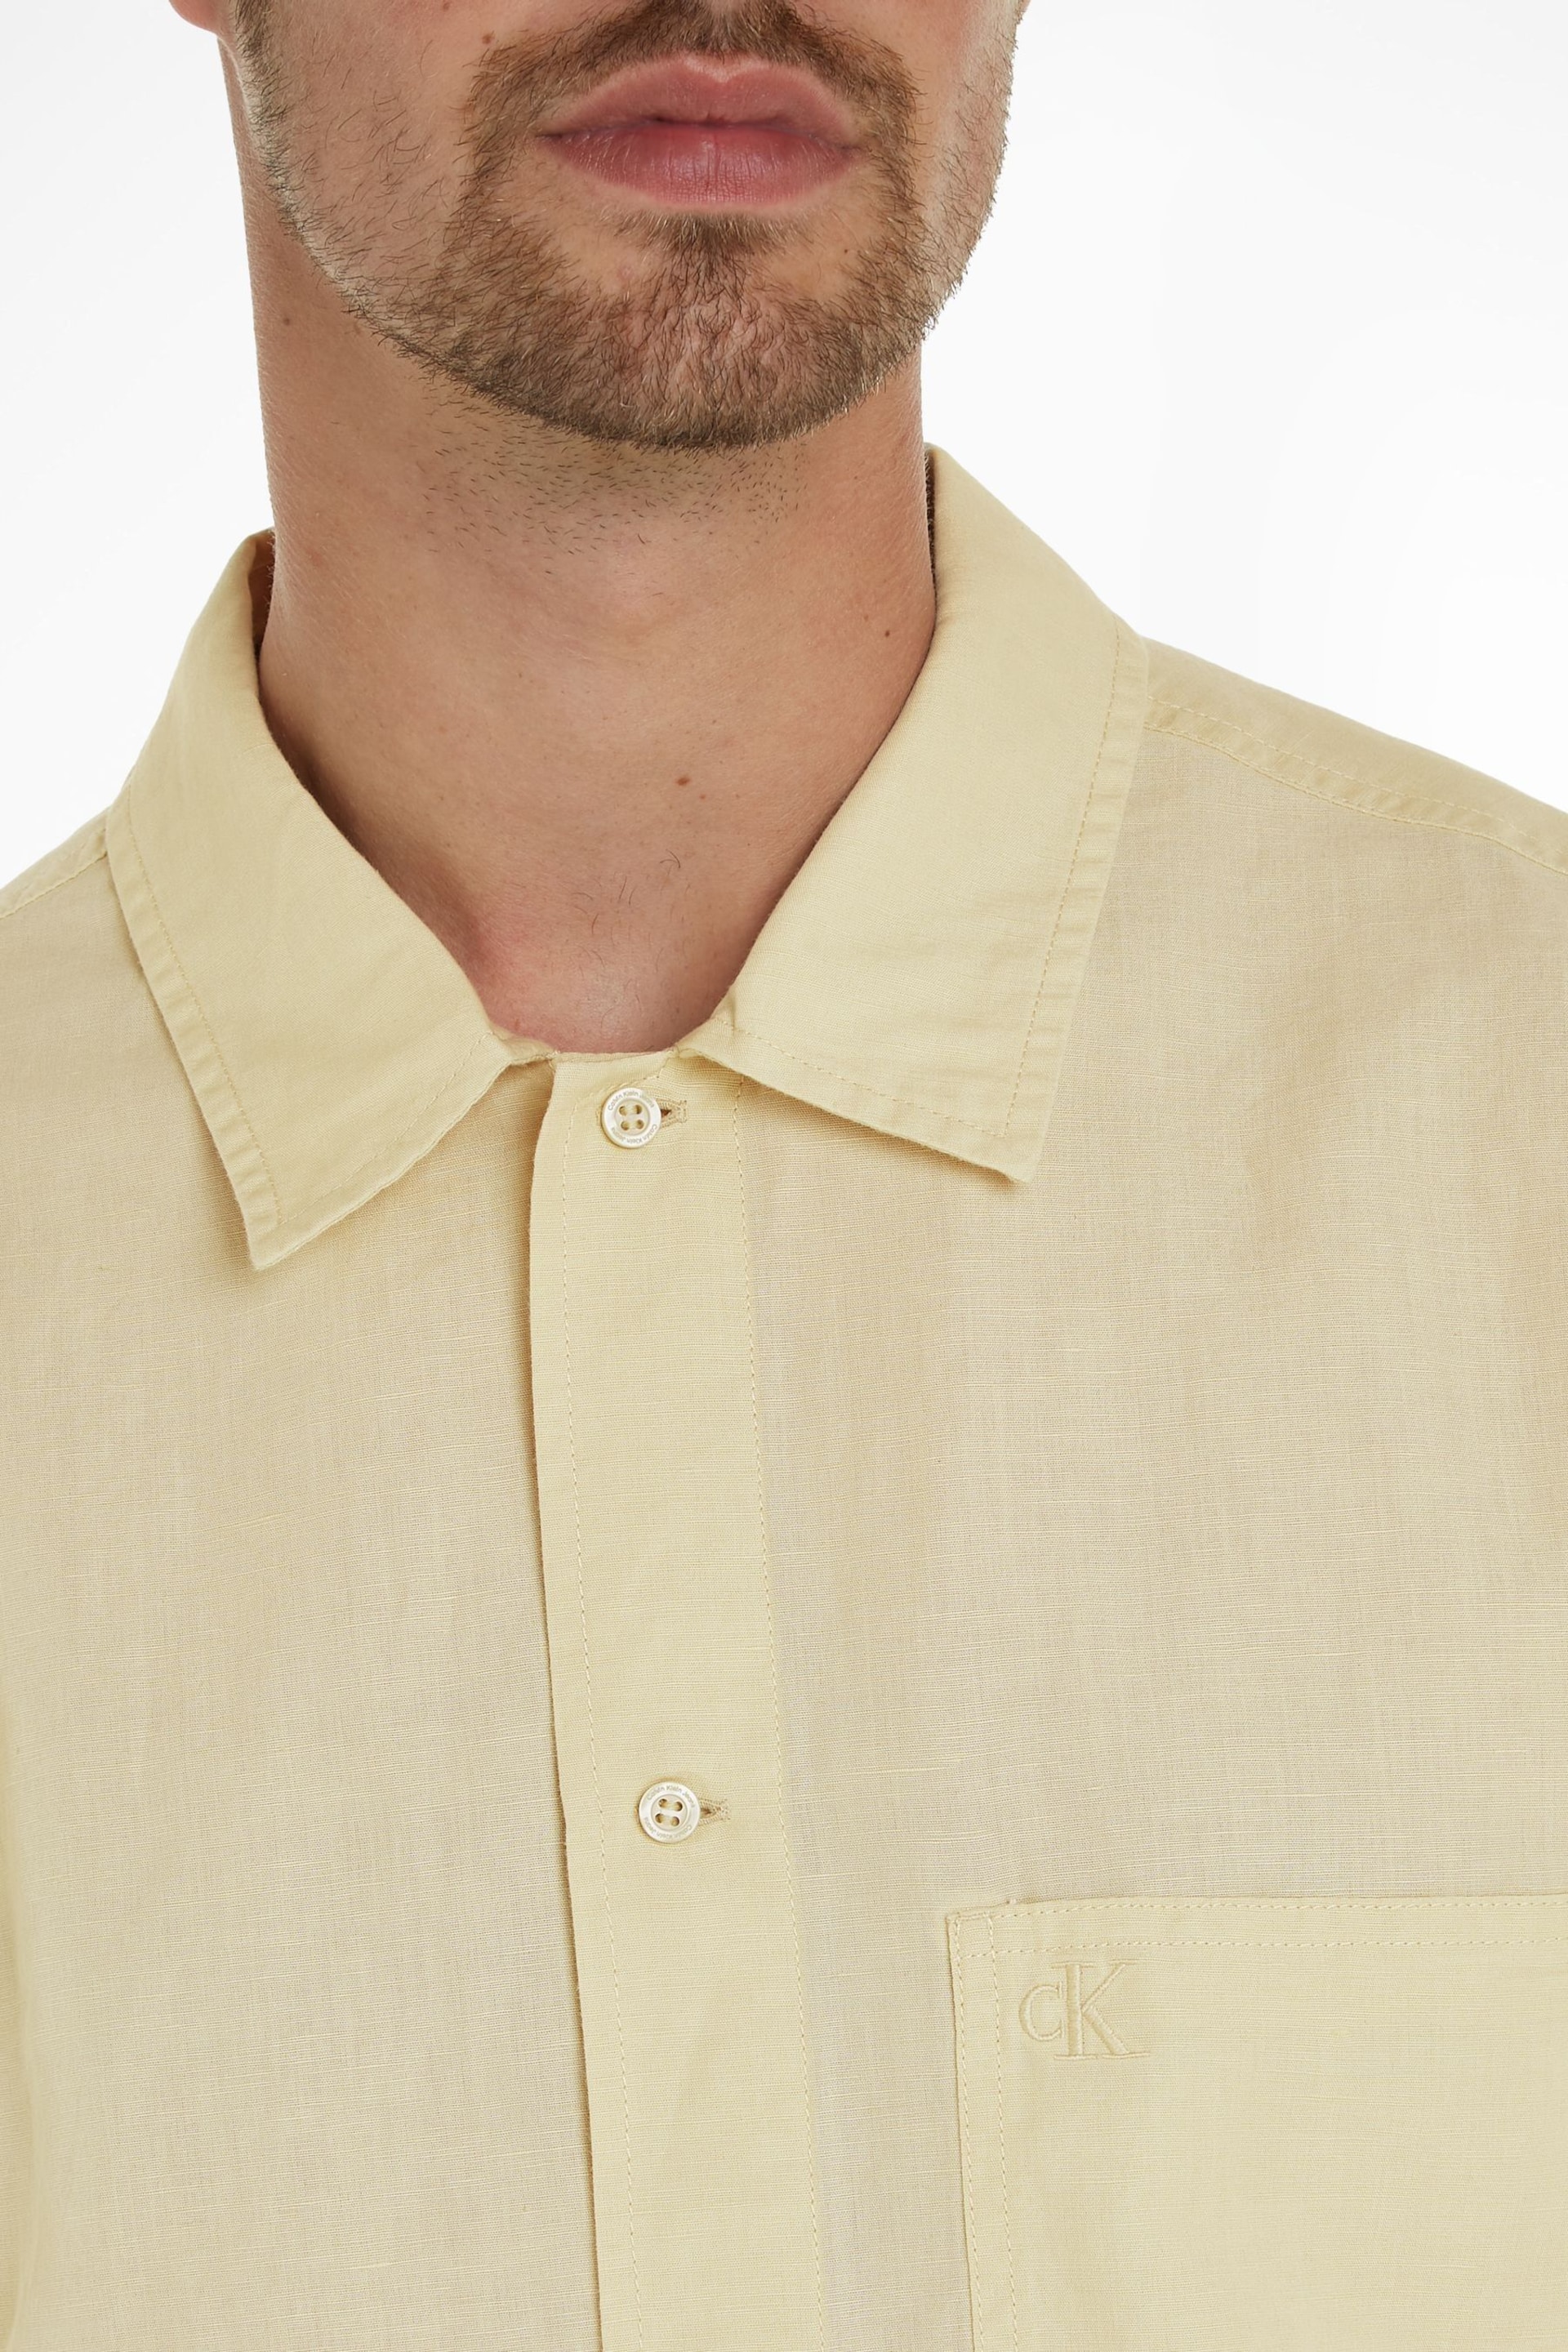 Calvin Klein Green Linen Button Down Shirt - Image 3 of 3